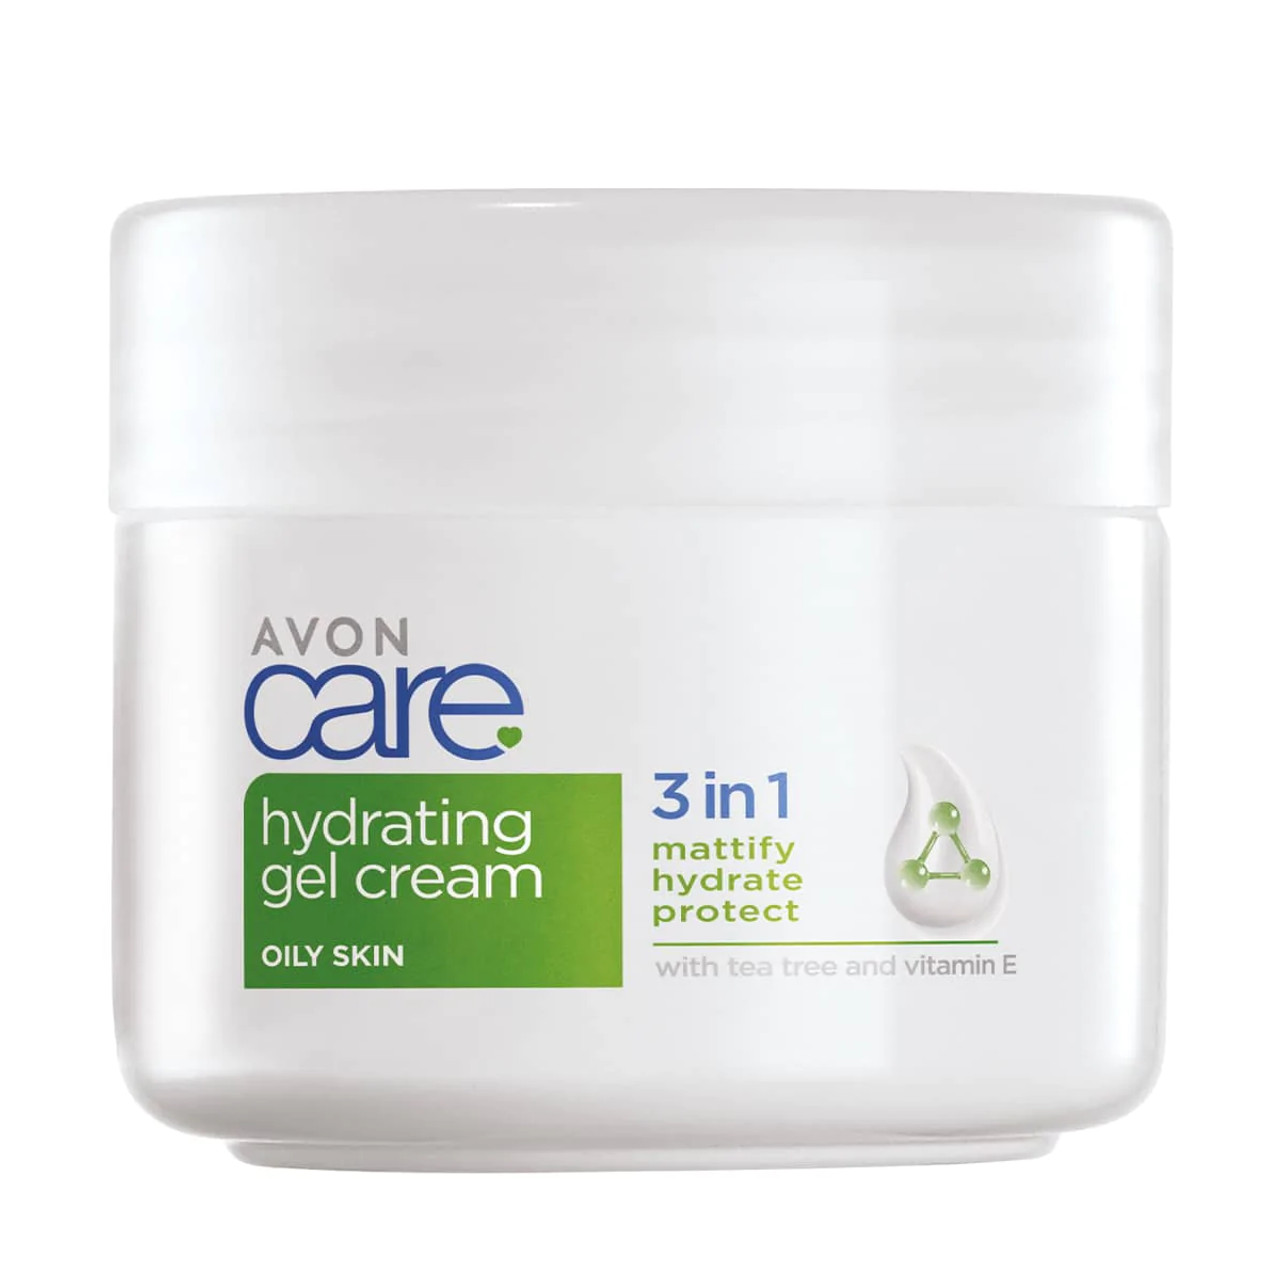 Avon Care Hydrating Face Cream for Normal Skin 100ml كريم مرطب لبشرة الوجه  2*1 بفيتامين ج